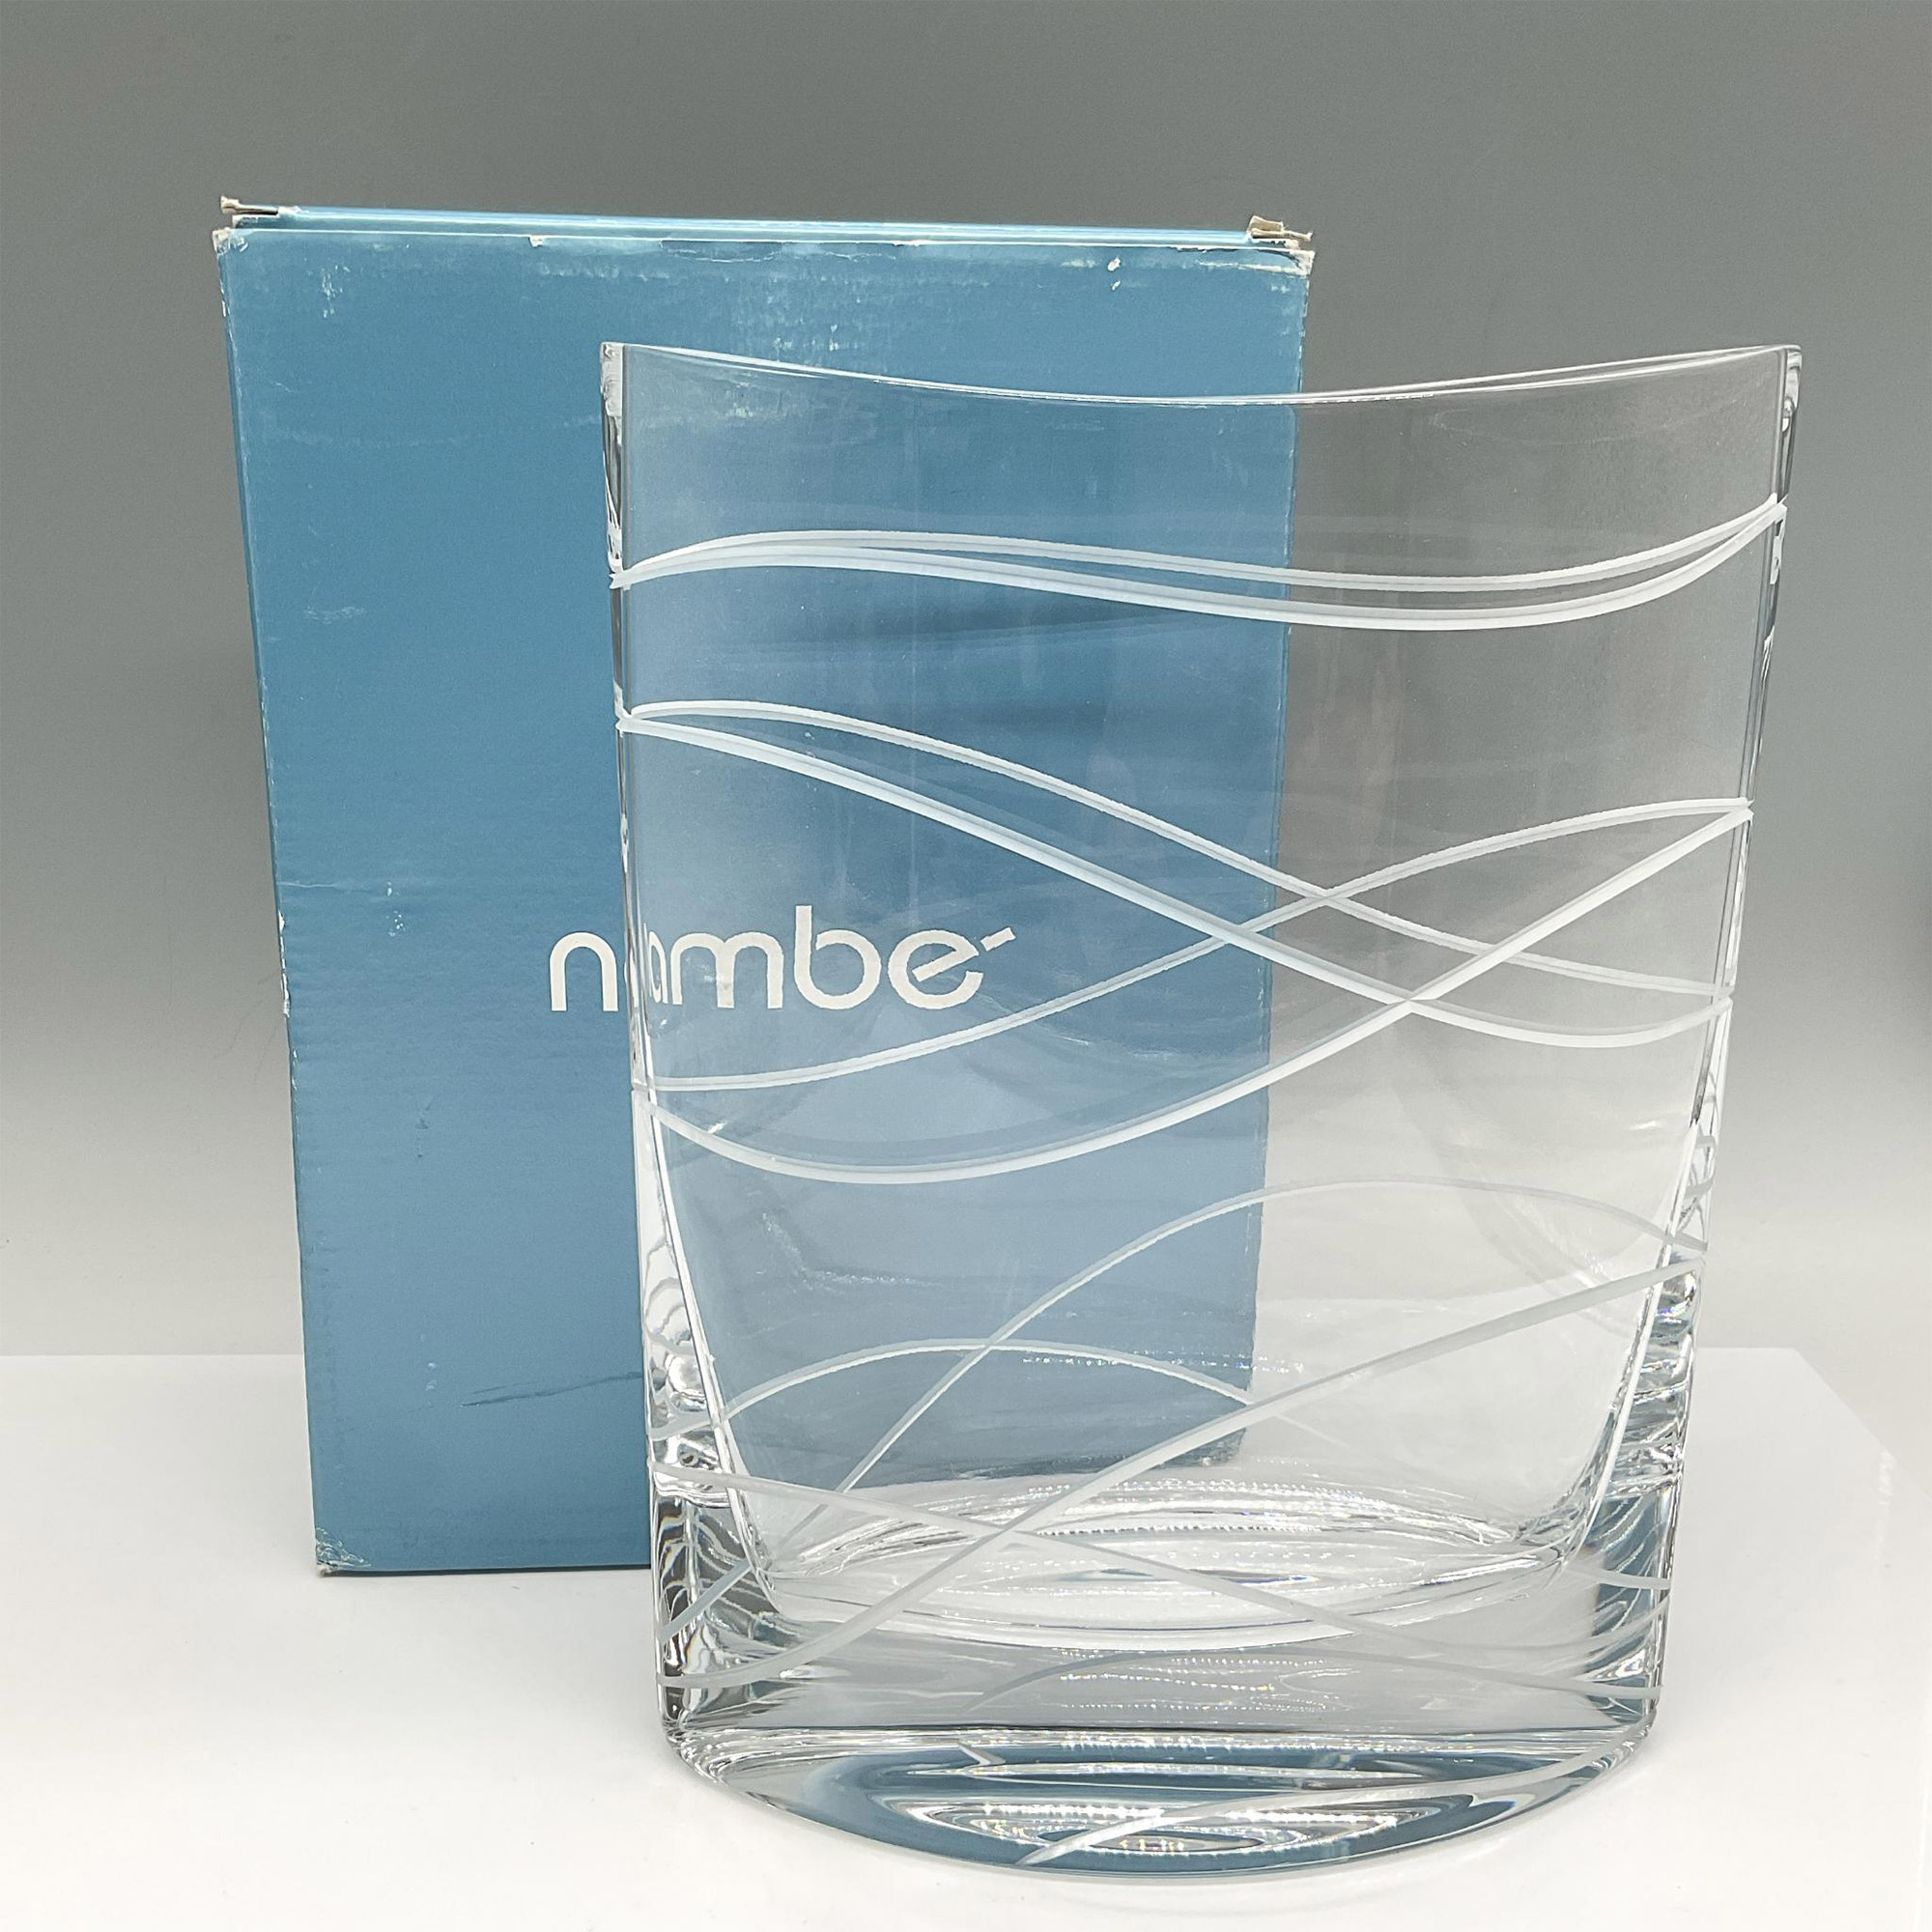 Nambe' Crystal Vase, Wave - Image 4 of 4